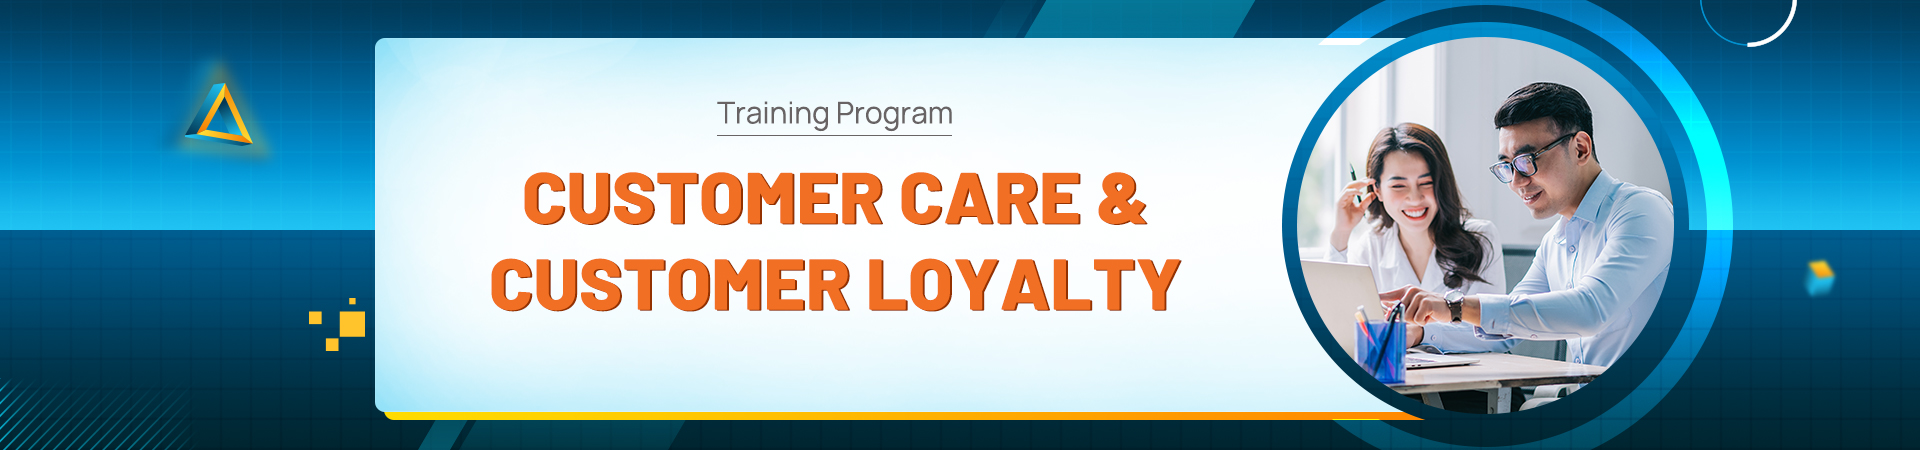 Customer Care & Customer Loyalty